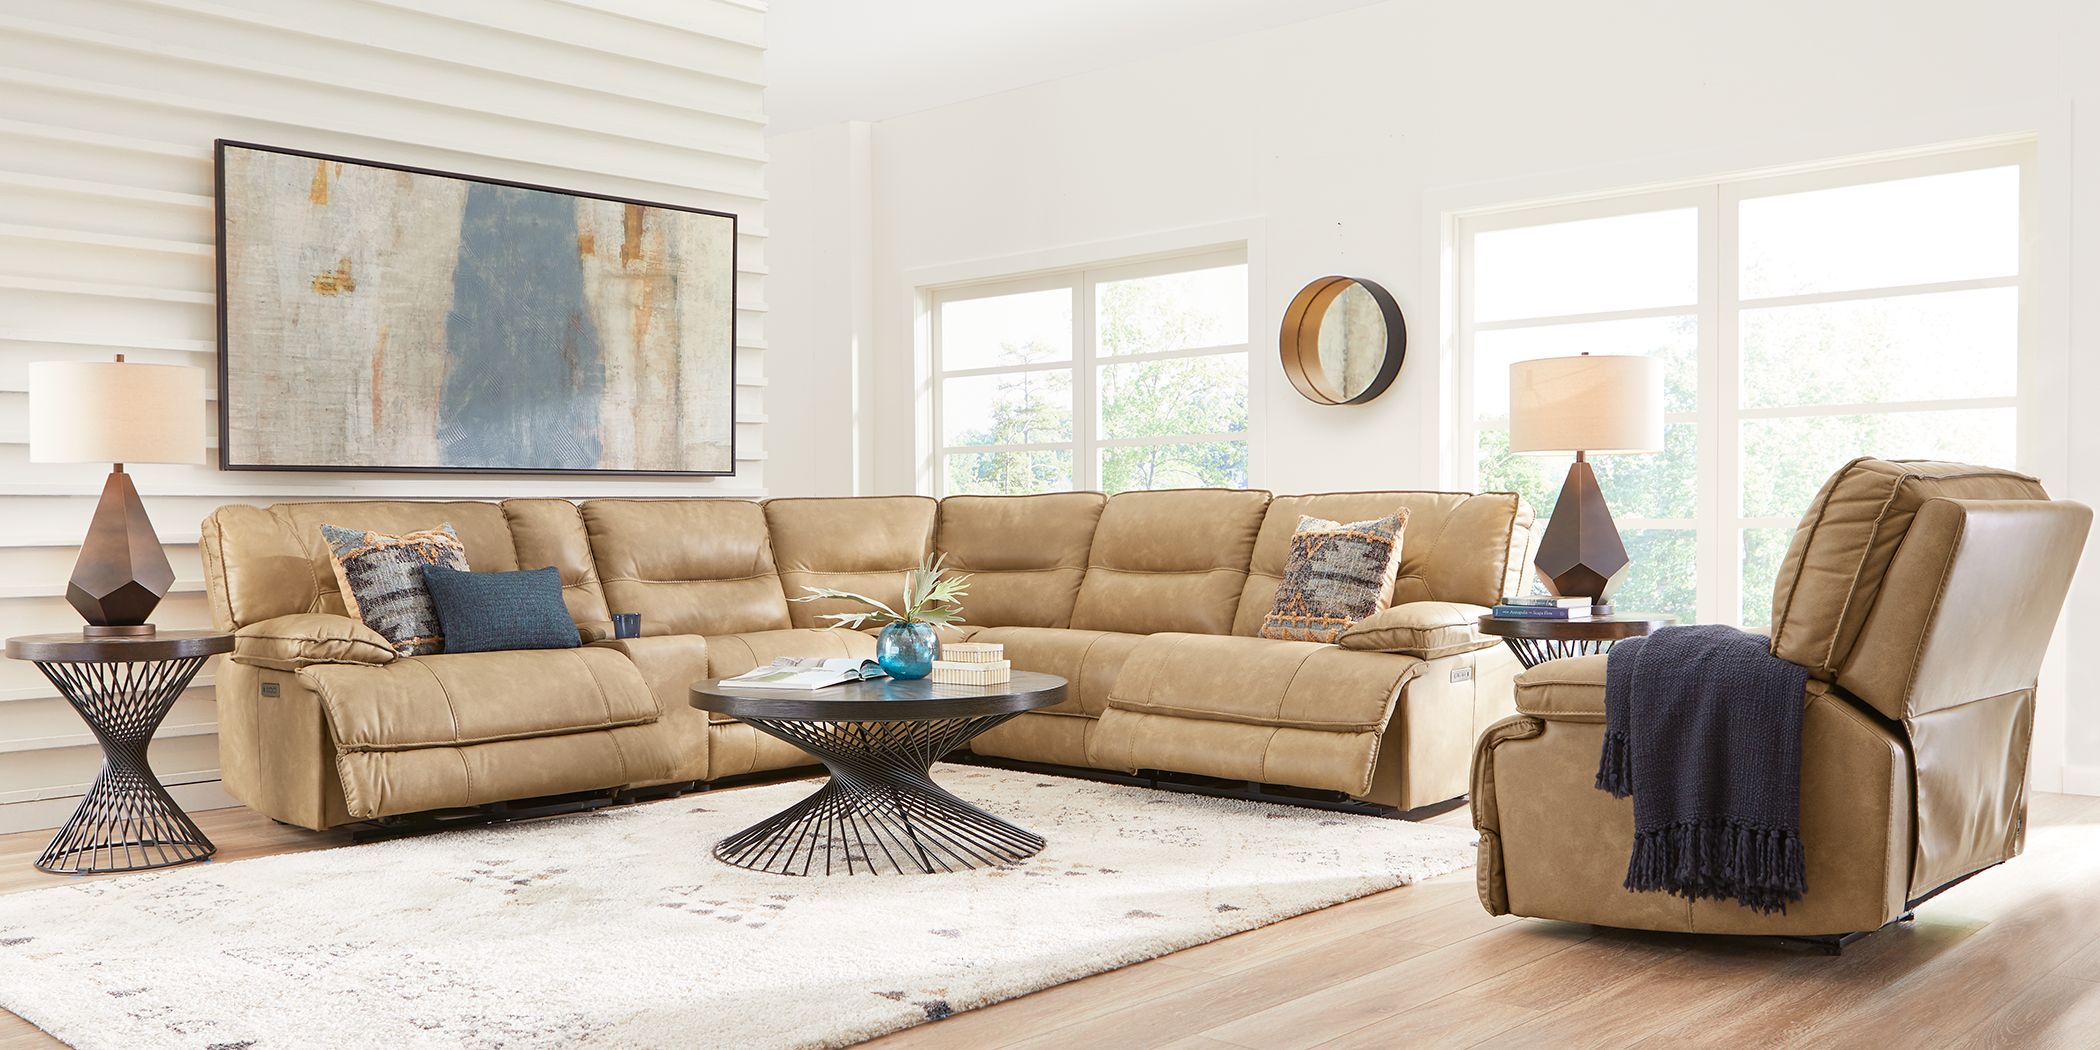 6 Piece Living Room Sofa Sets Of Furniture